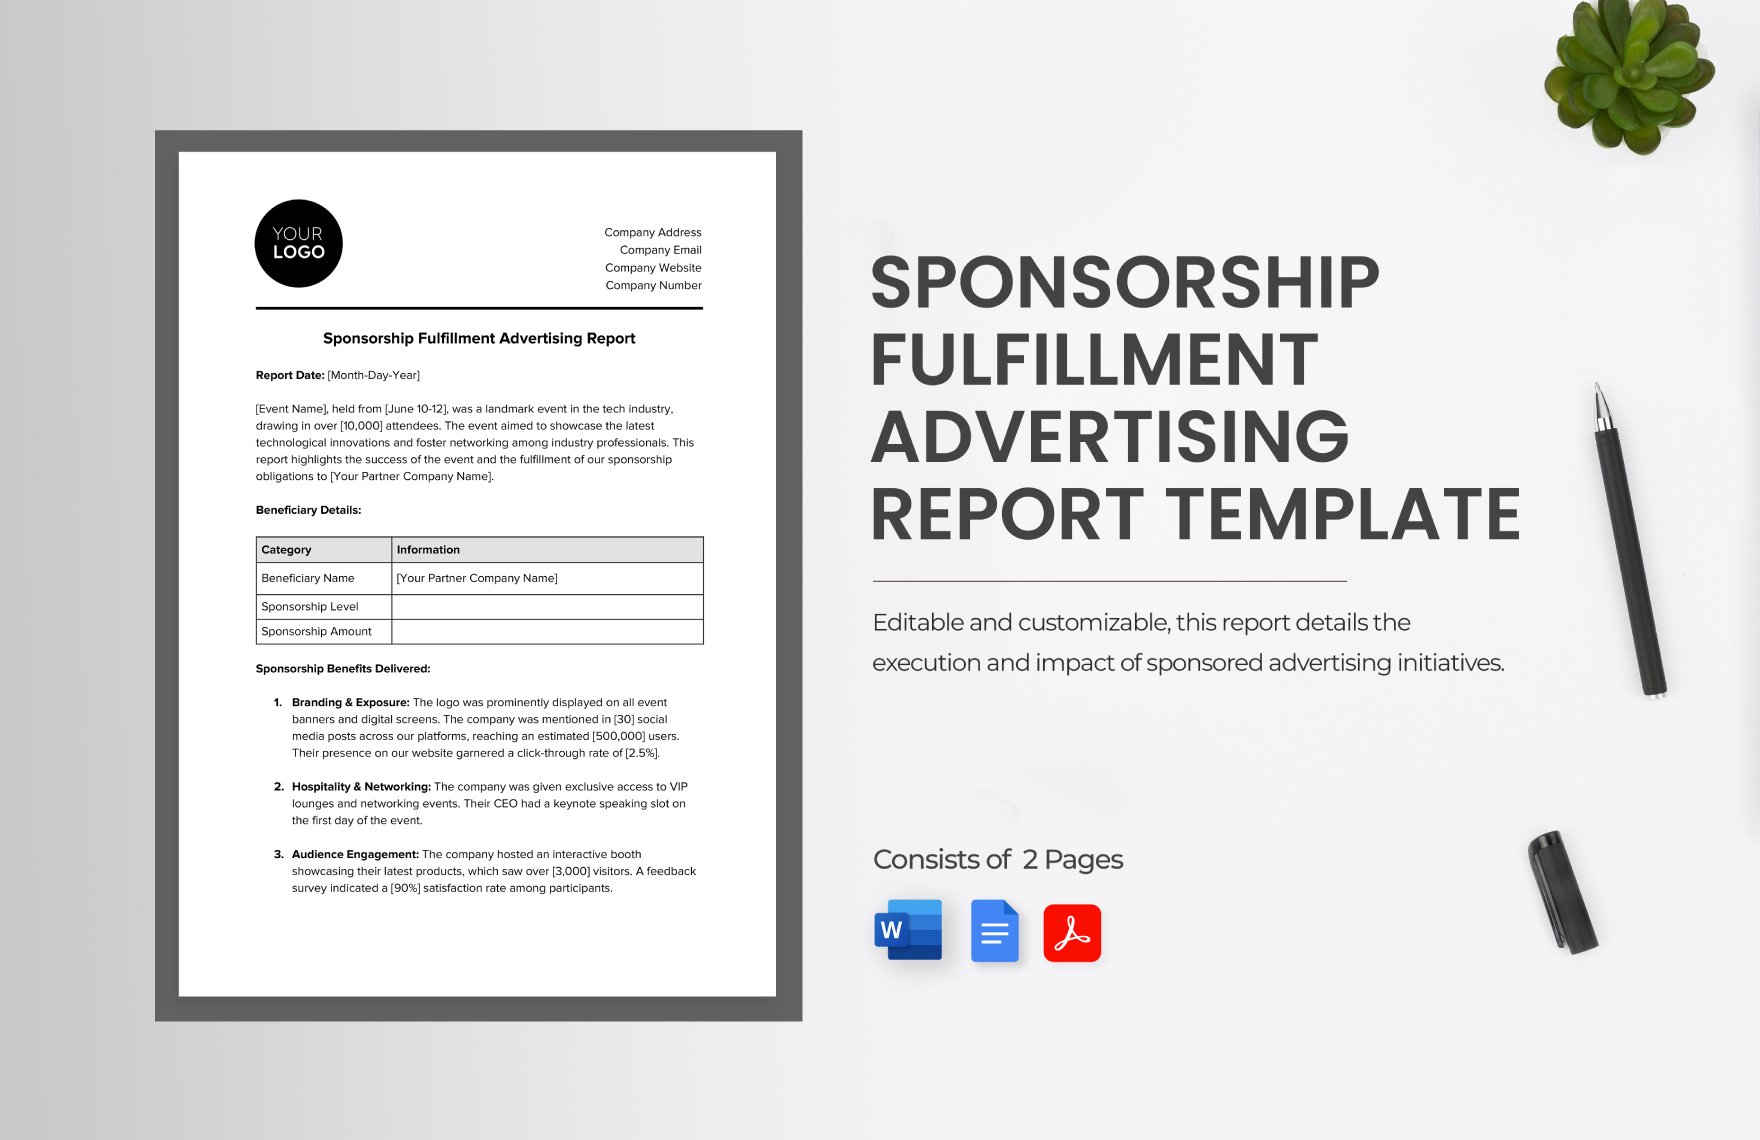 Sponsorship Fulfillment Advertising Report Template